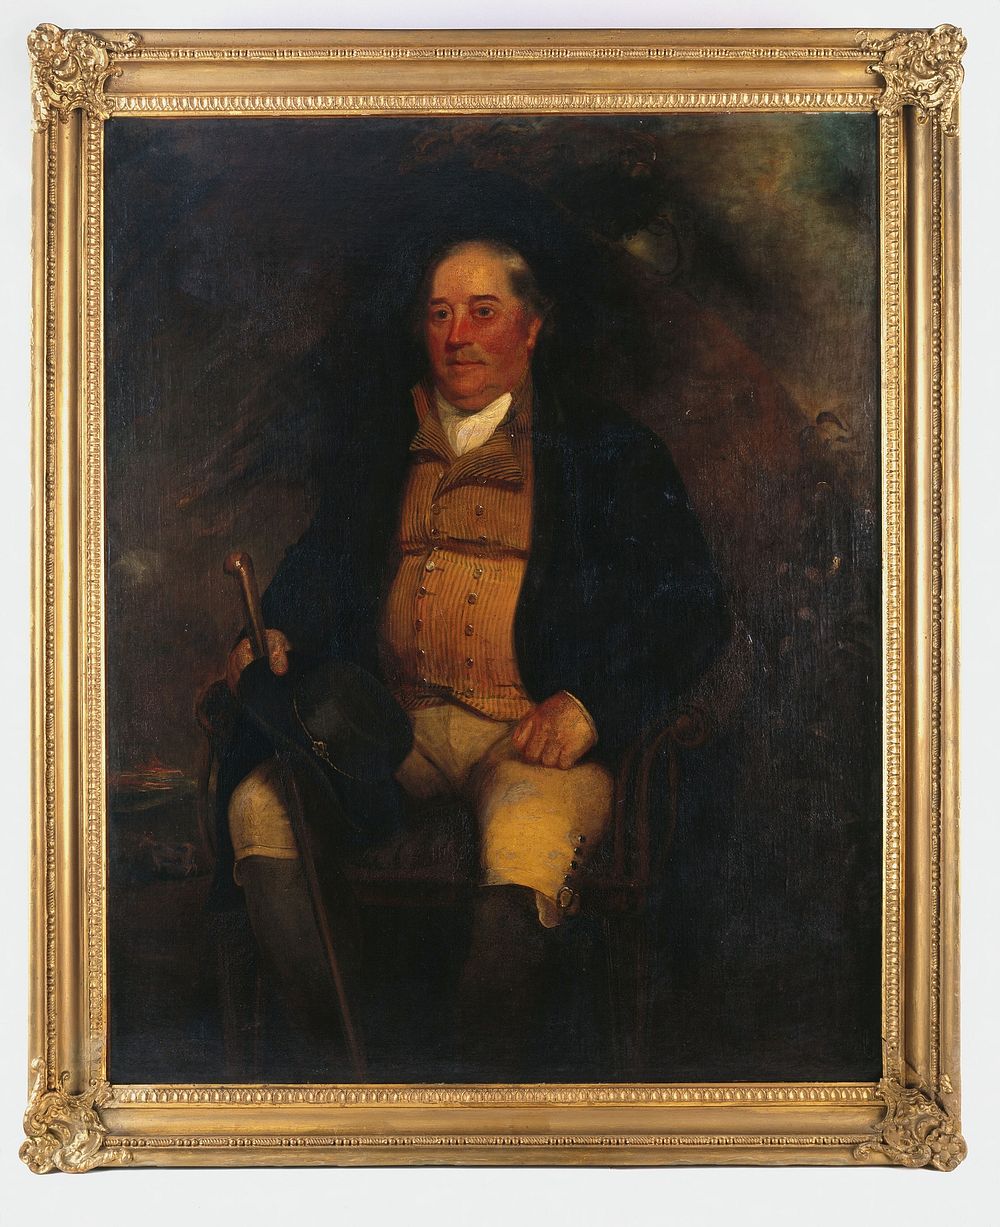 Benjamin Jesty. Oil painting by M.W. Sharp, 1805.